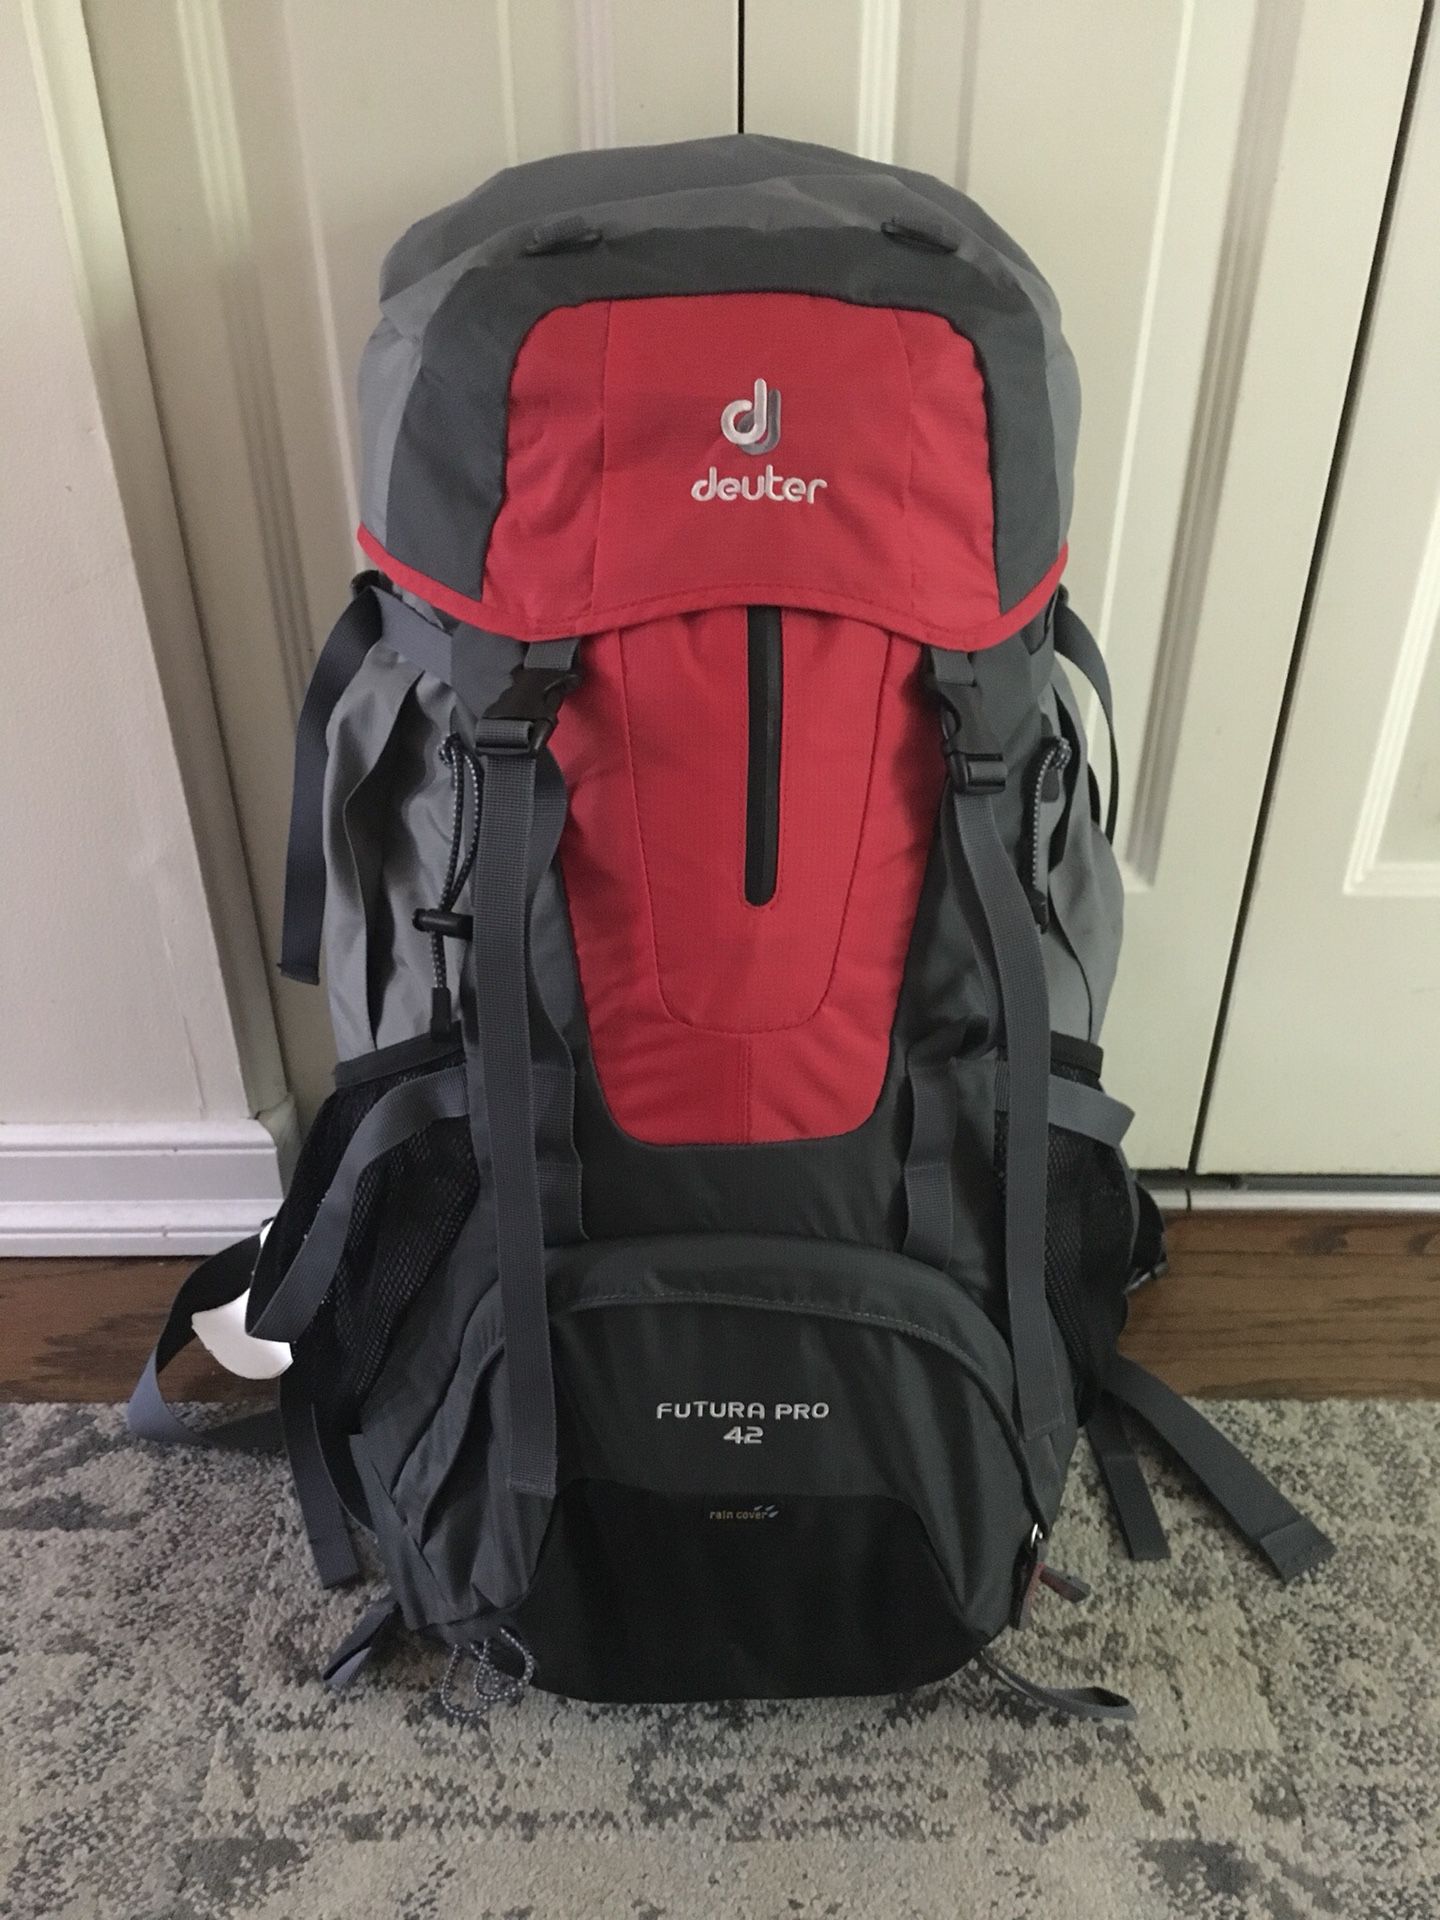 Deuter Futura Pro 42 Pack Backpack Bag